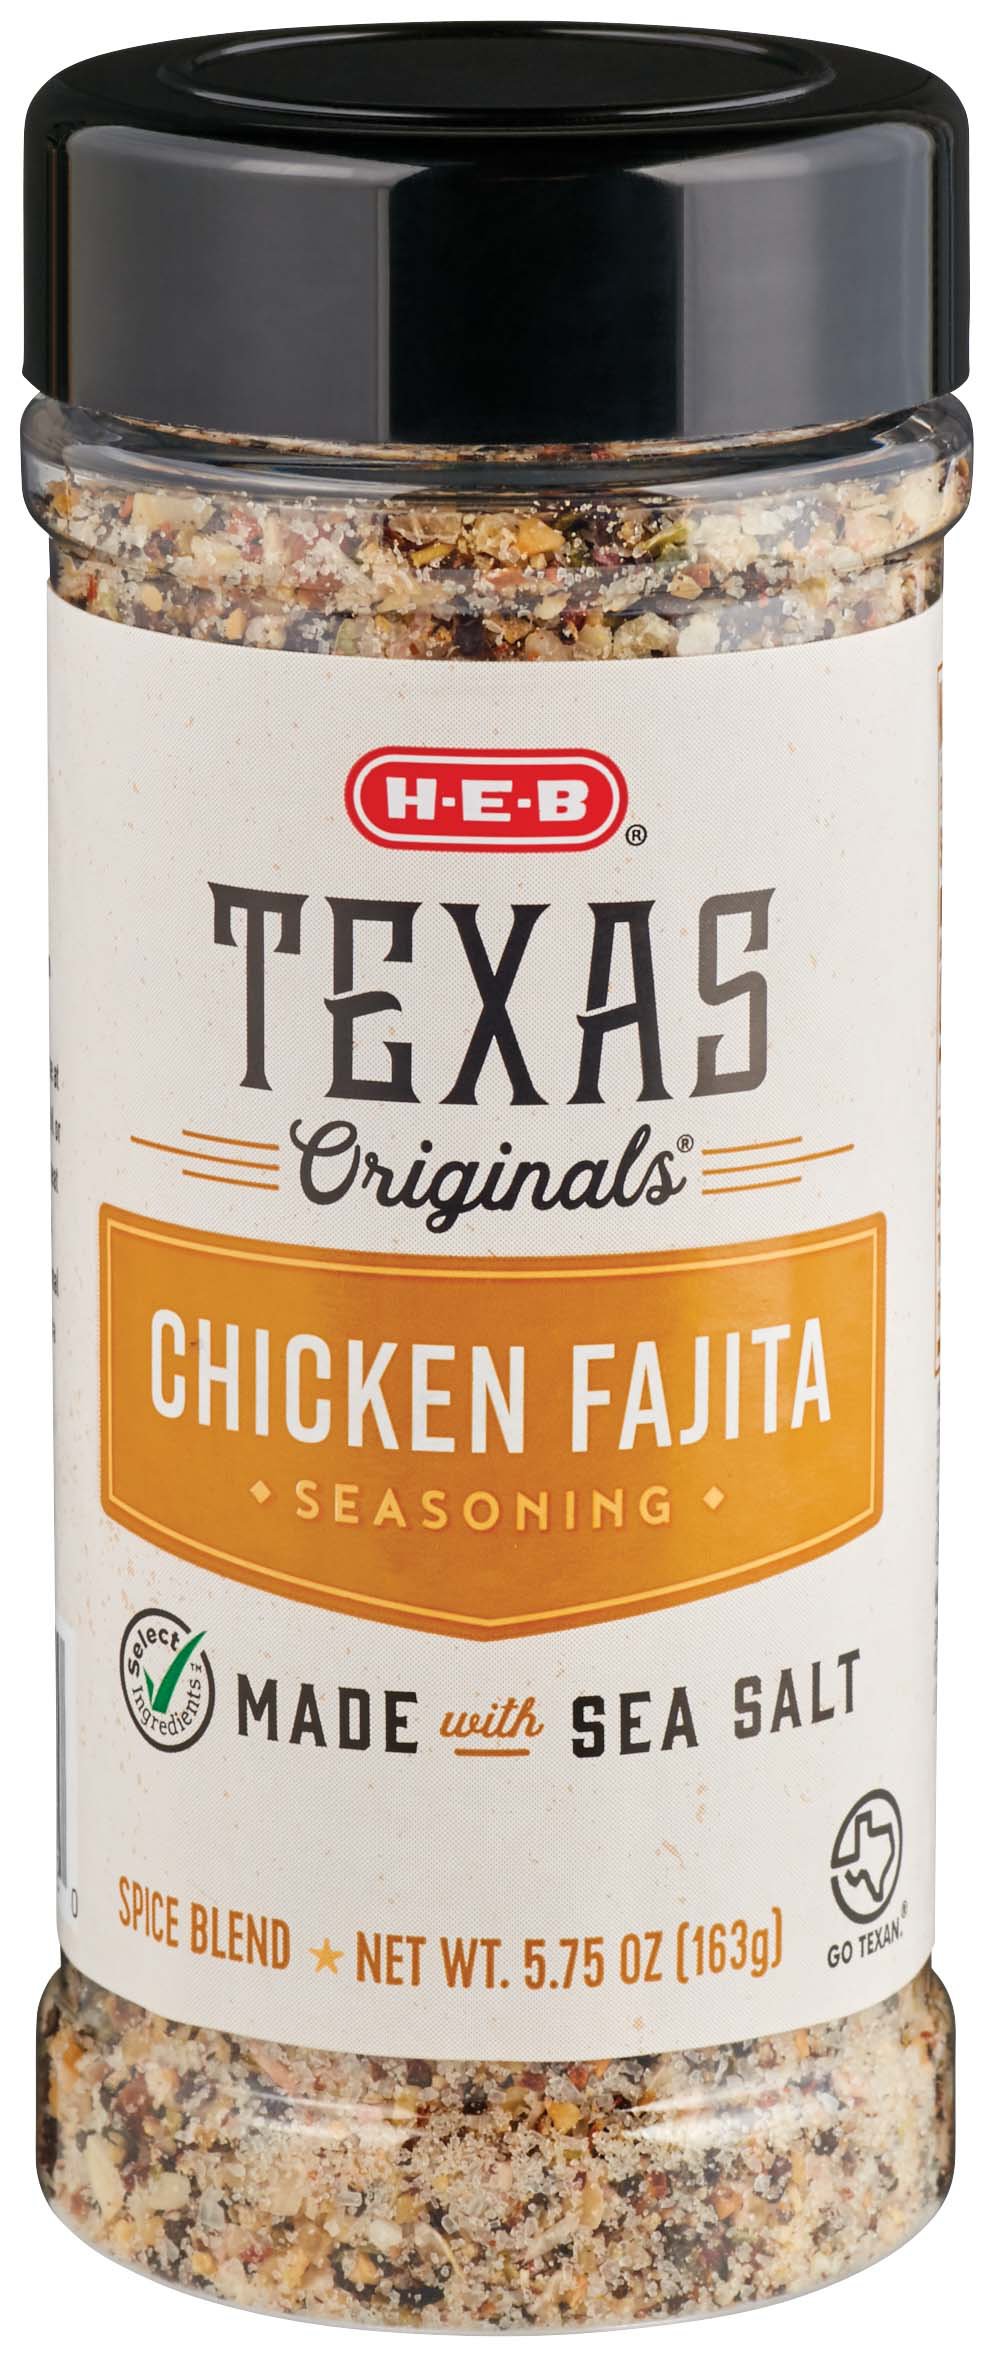 H-E-B Texas Originals Chicken Fajita Seasoning Spice Blend